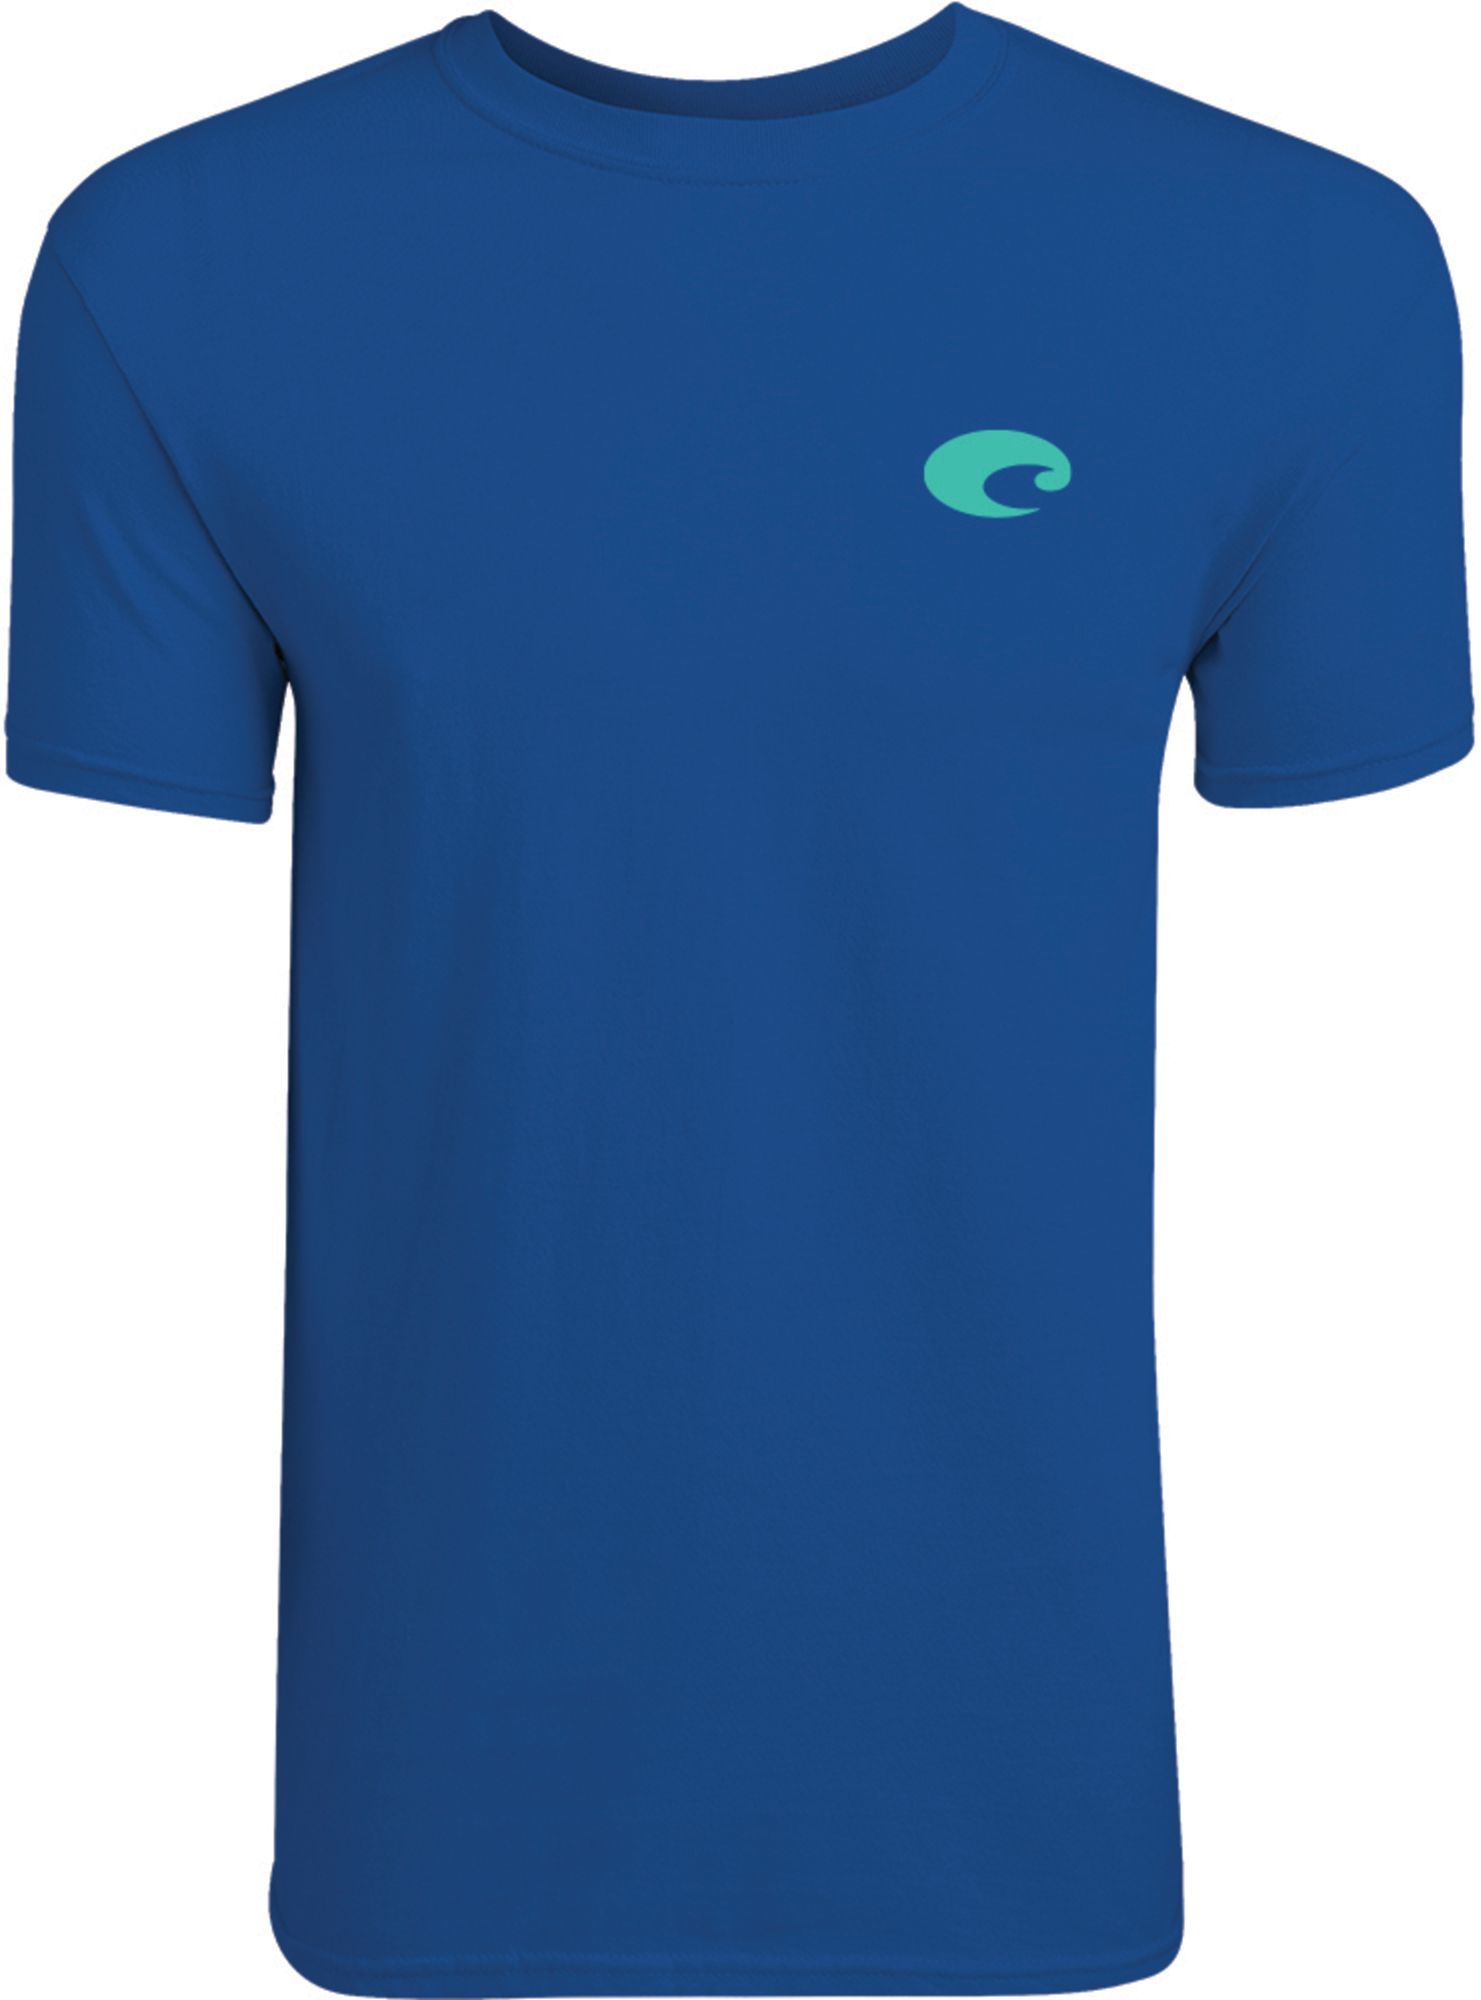 Dick's Sporting Goods Costa Del Mar Men's Founders Font T-Shirt